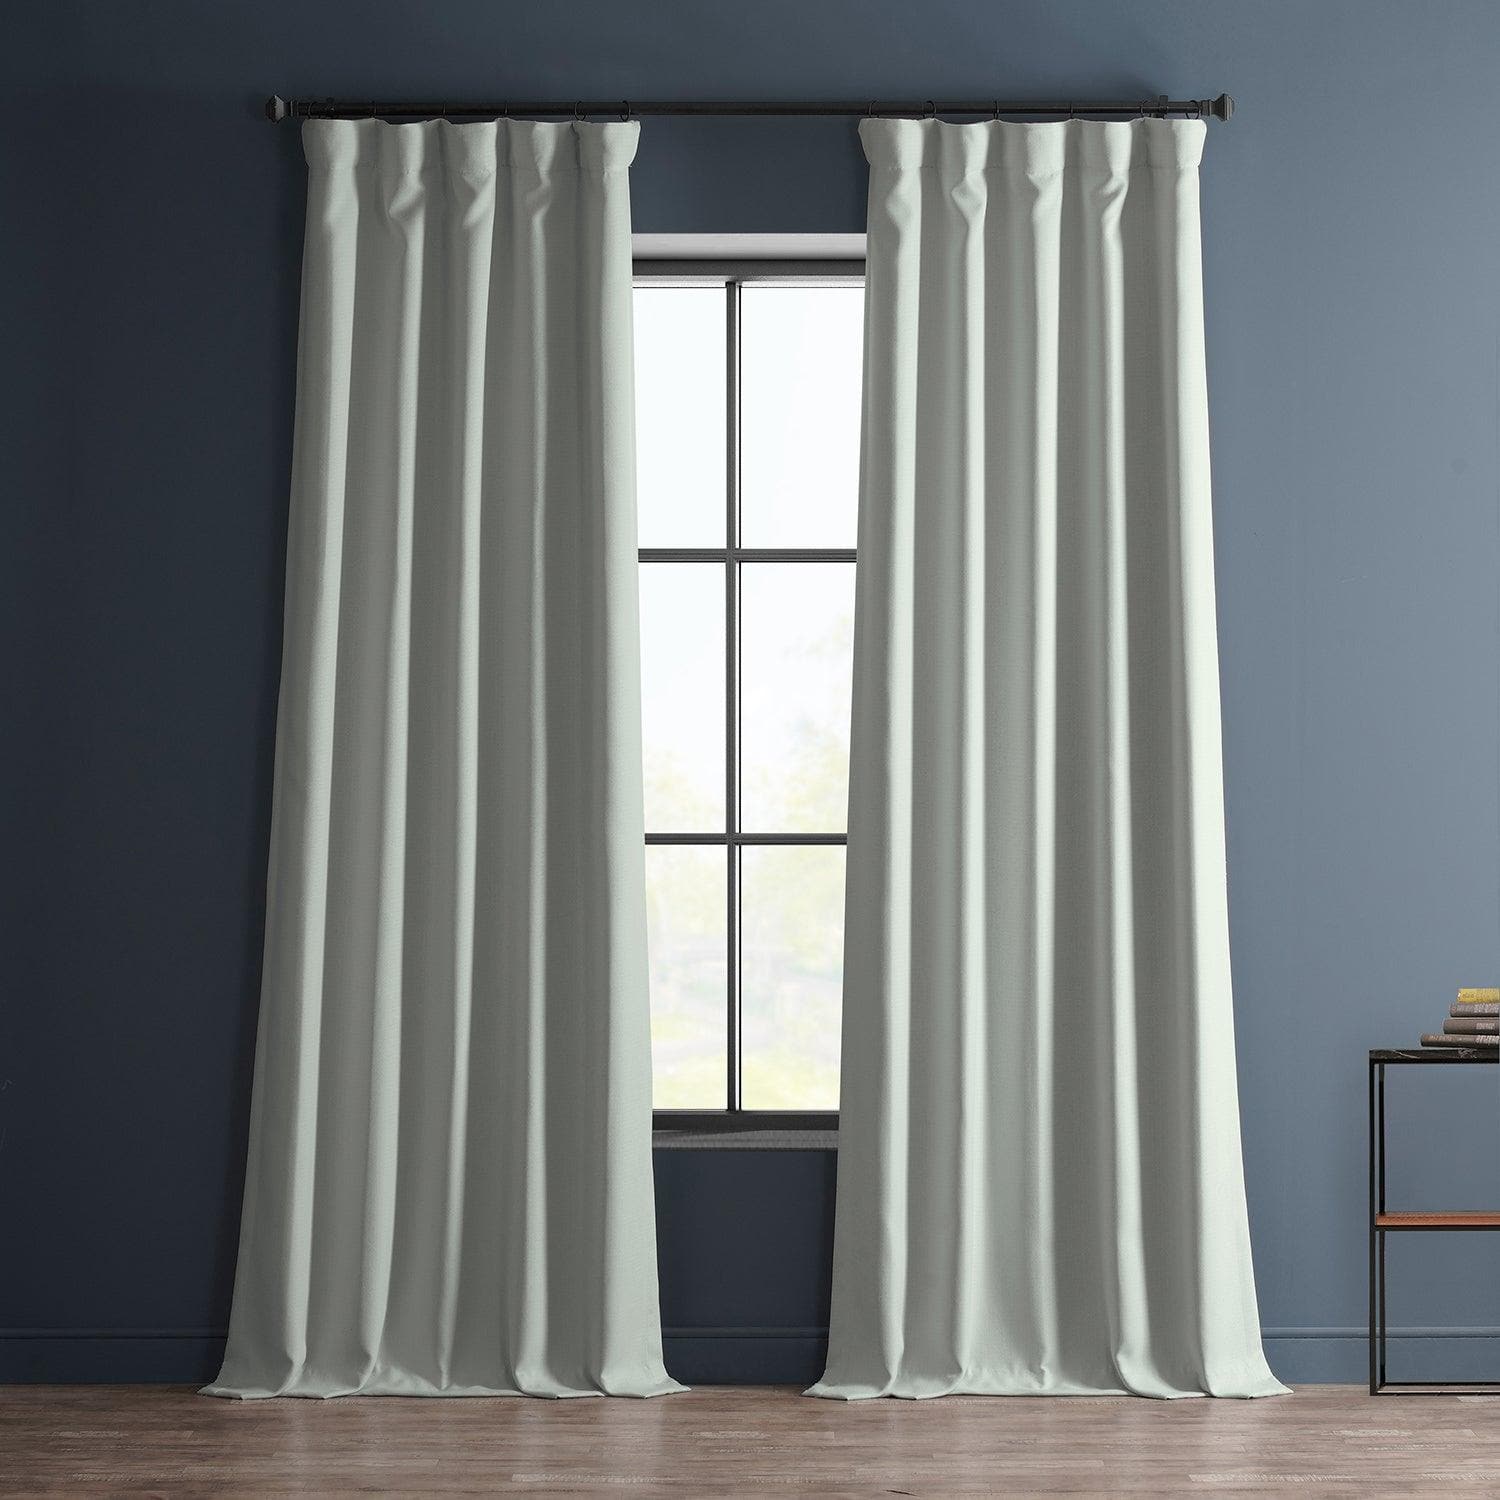 Oyster Textured Faux Linen Room Darkening Curtain